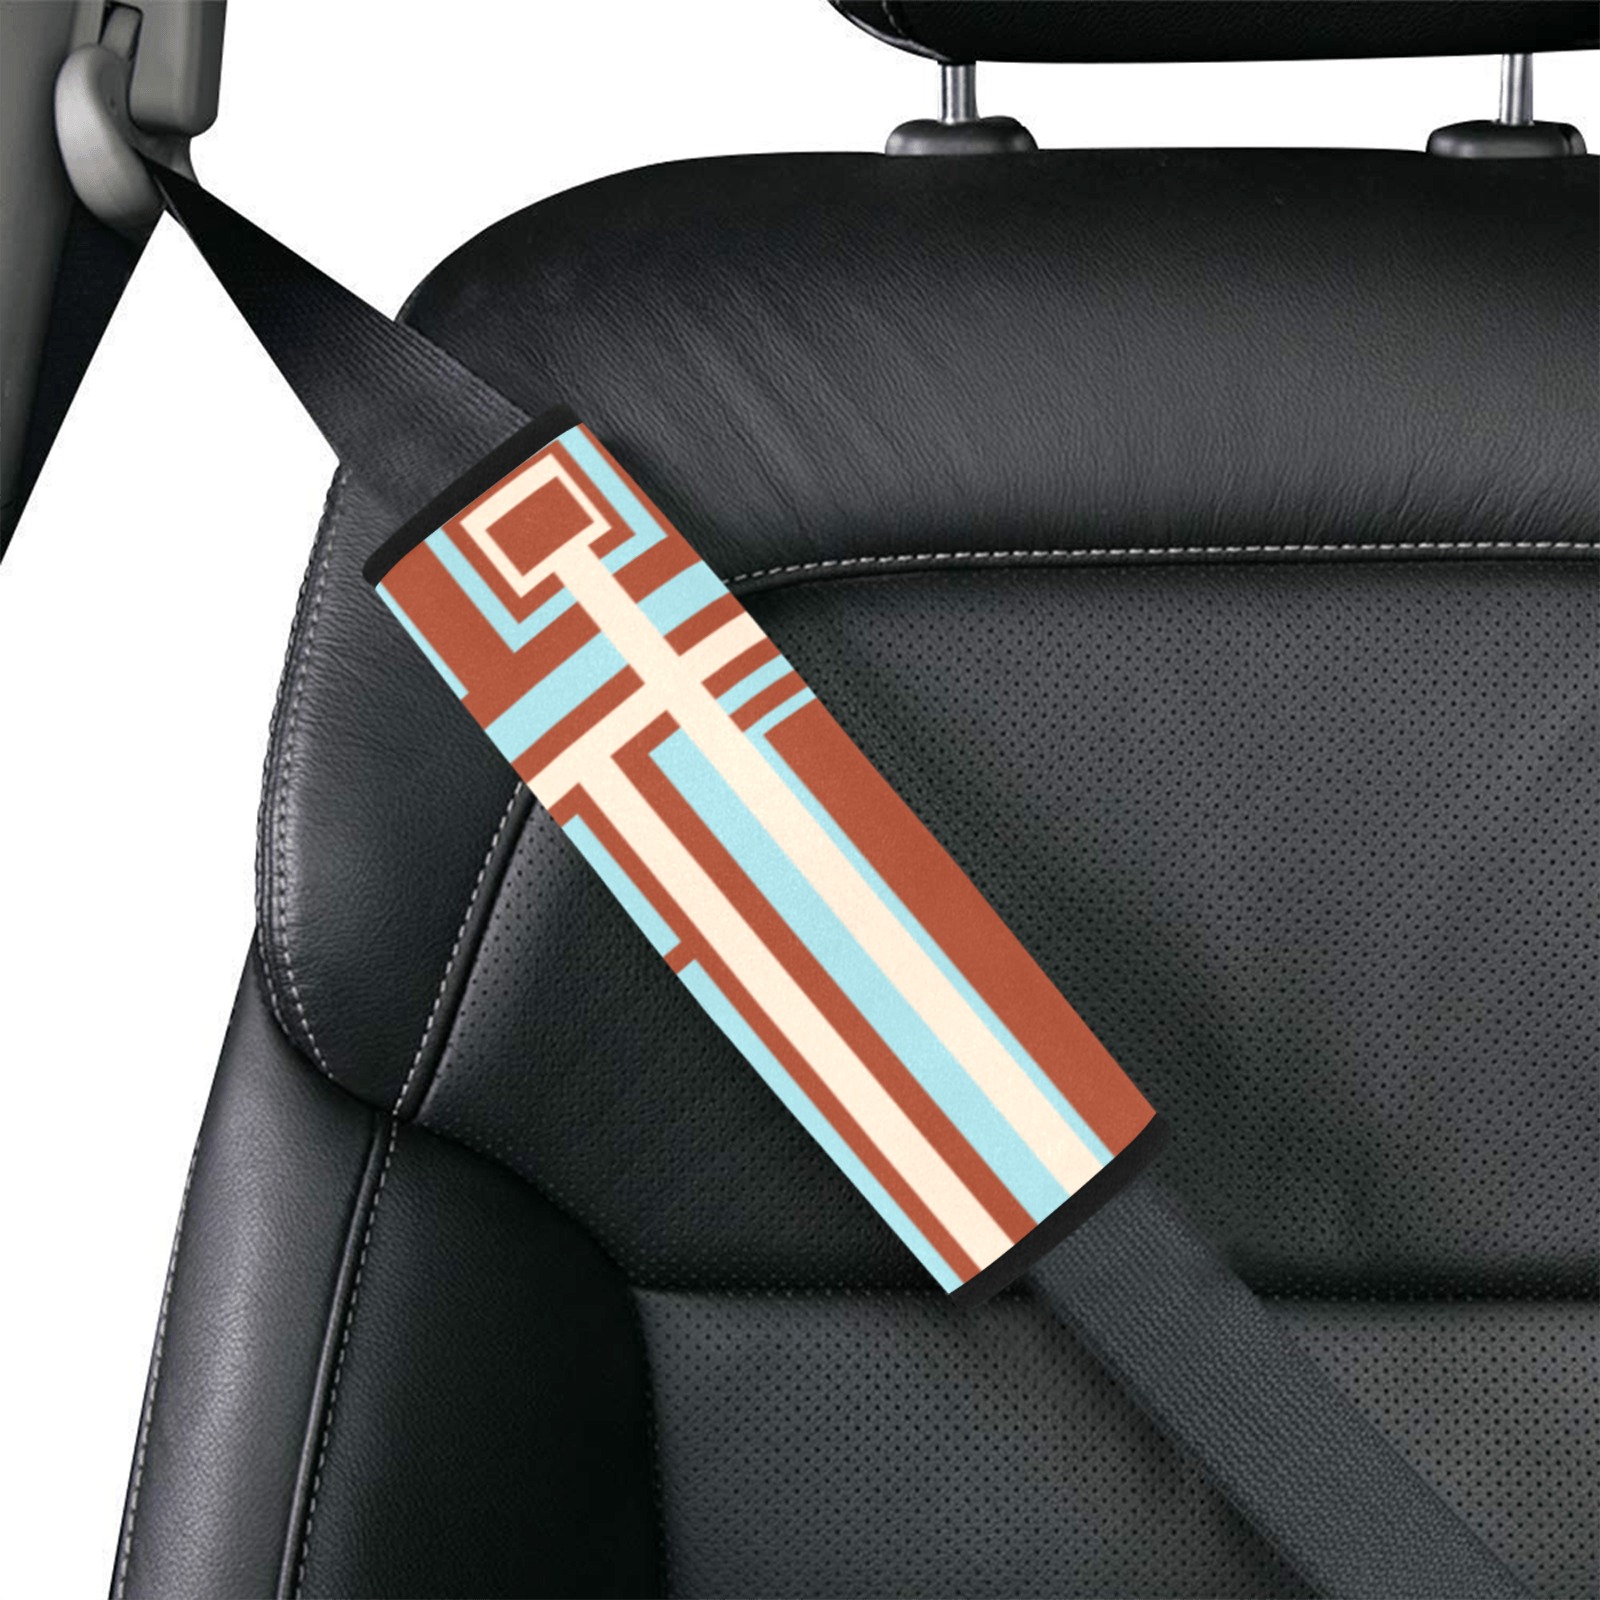 Model 1 Car Seat Belt Cover 7''x10'' (Pack of 2)